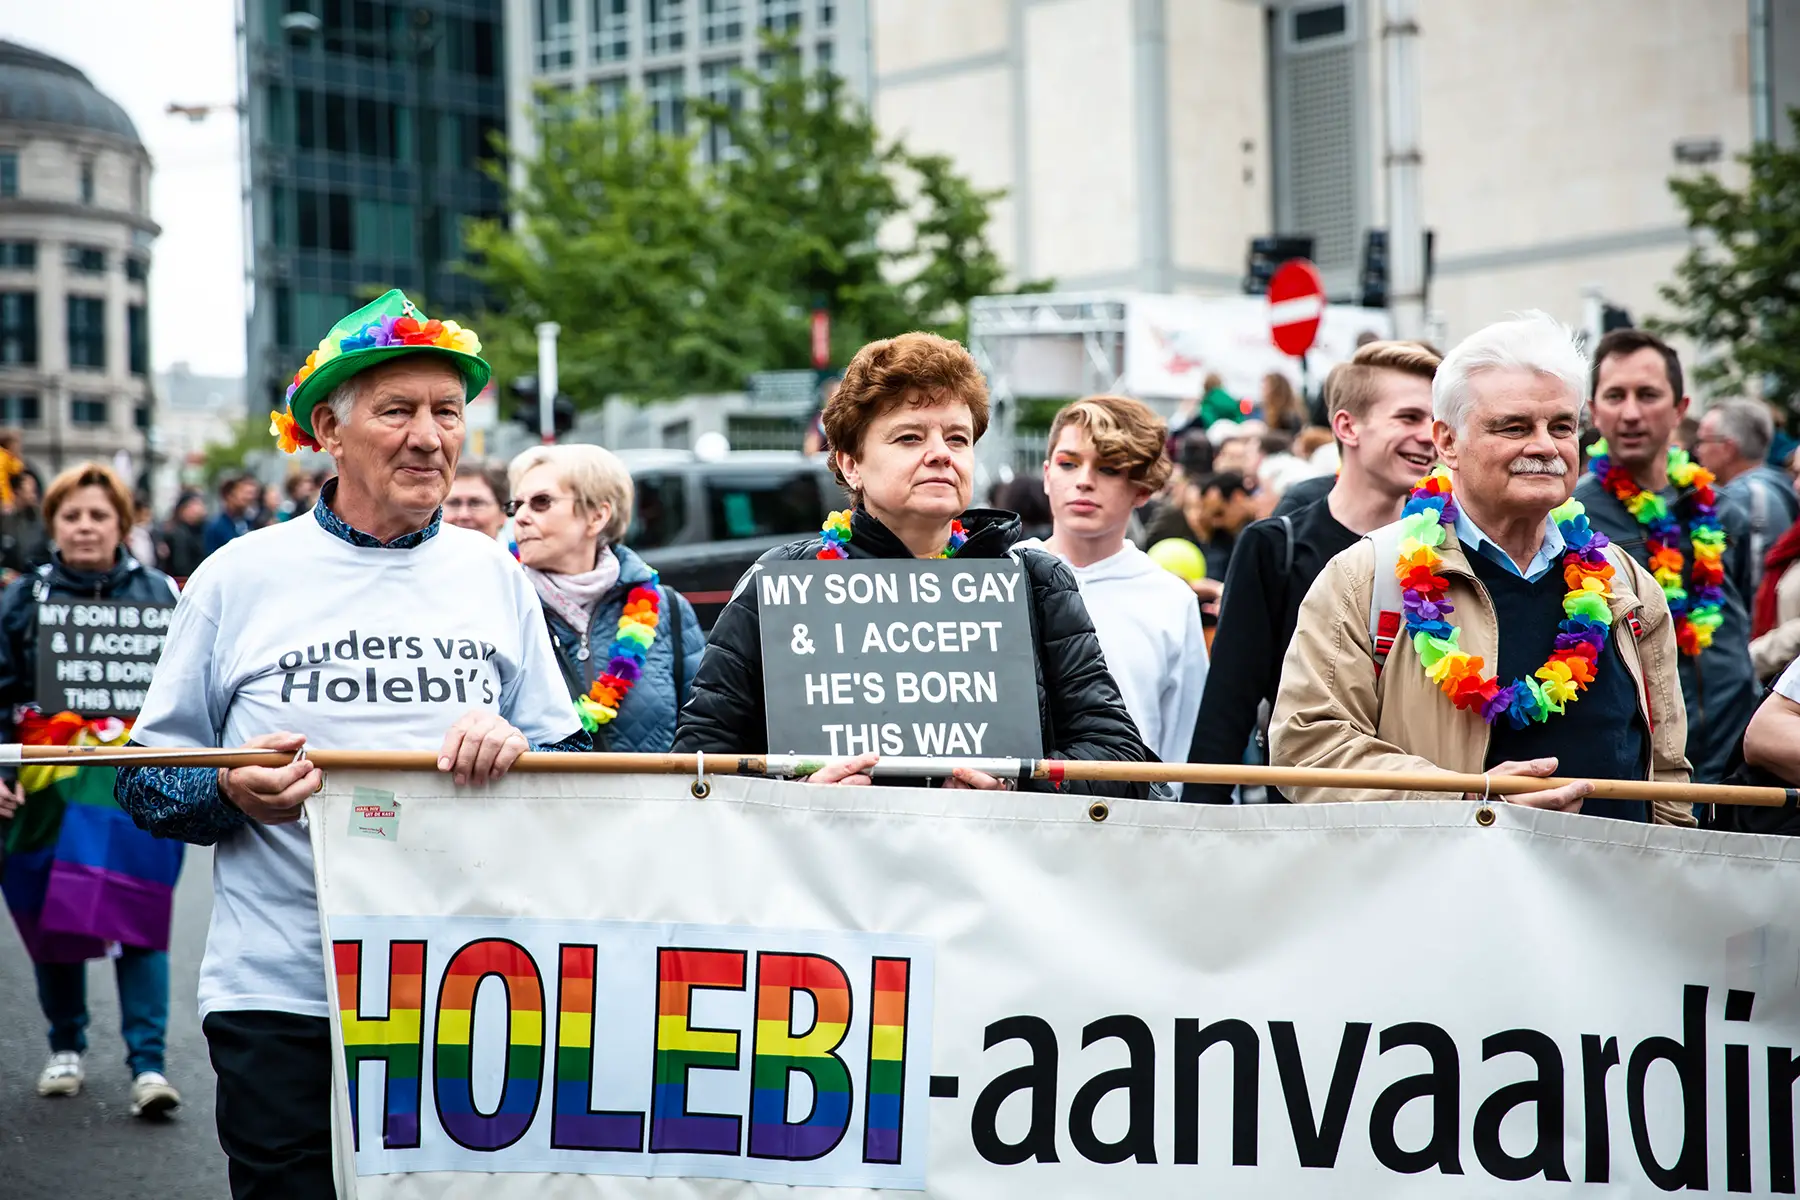 Brussels Pride Parade